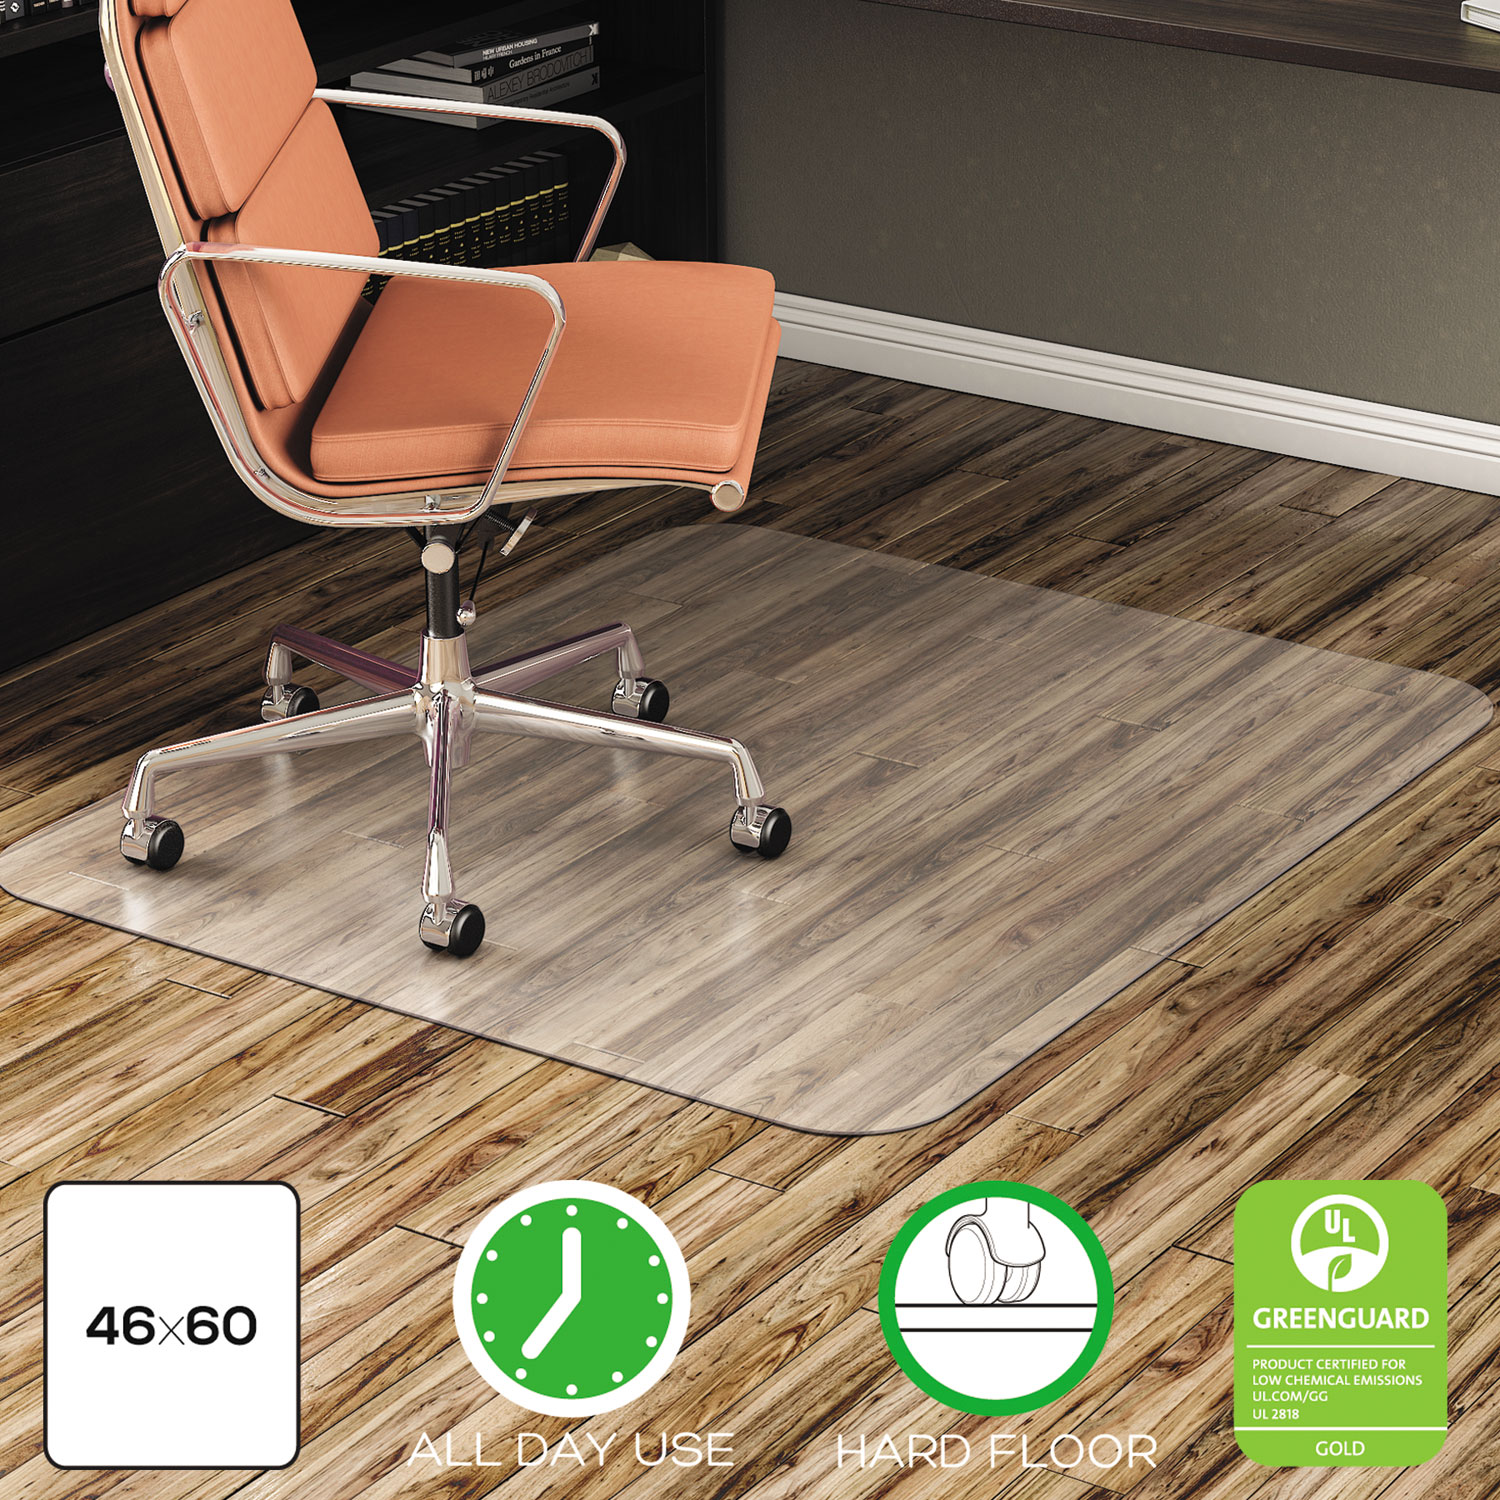  deflecto CM21442F EconoMat All Day Use Chair Mat for Hard Floors, 46 x 60, Rectangular, Clear (DEFCM21442F) 